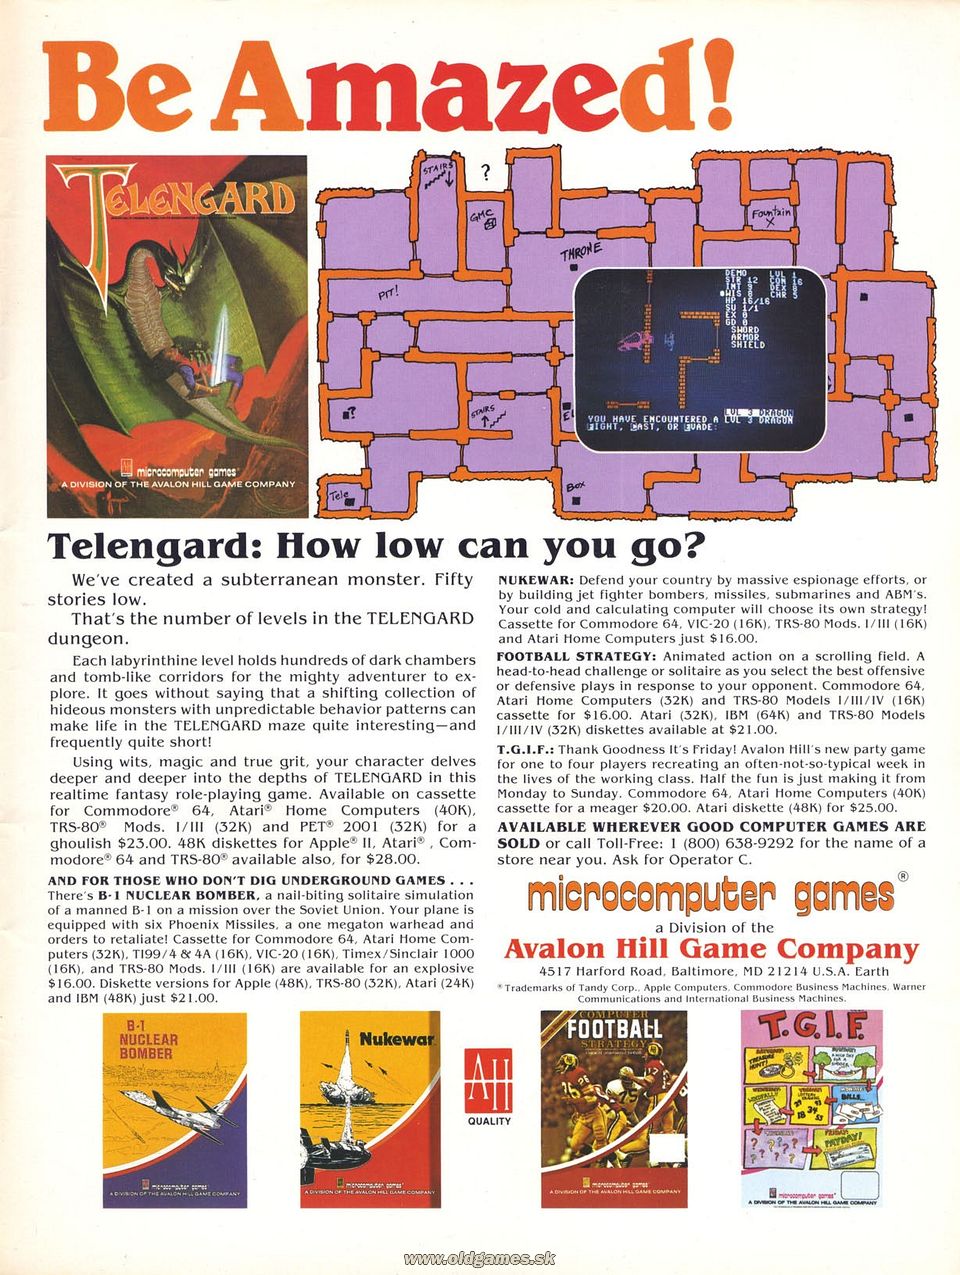 Advertisement: microcomputer games